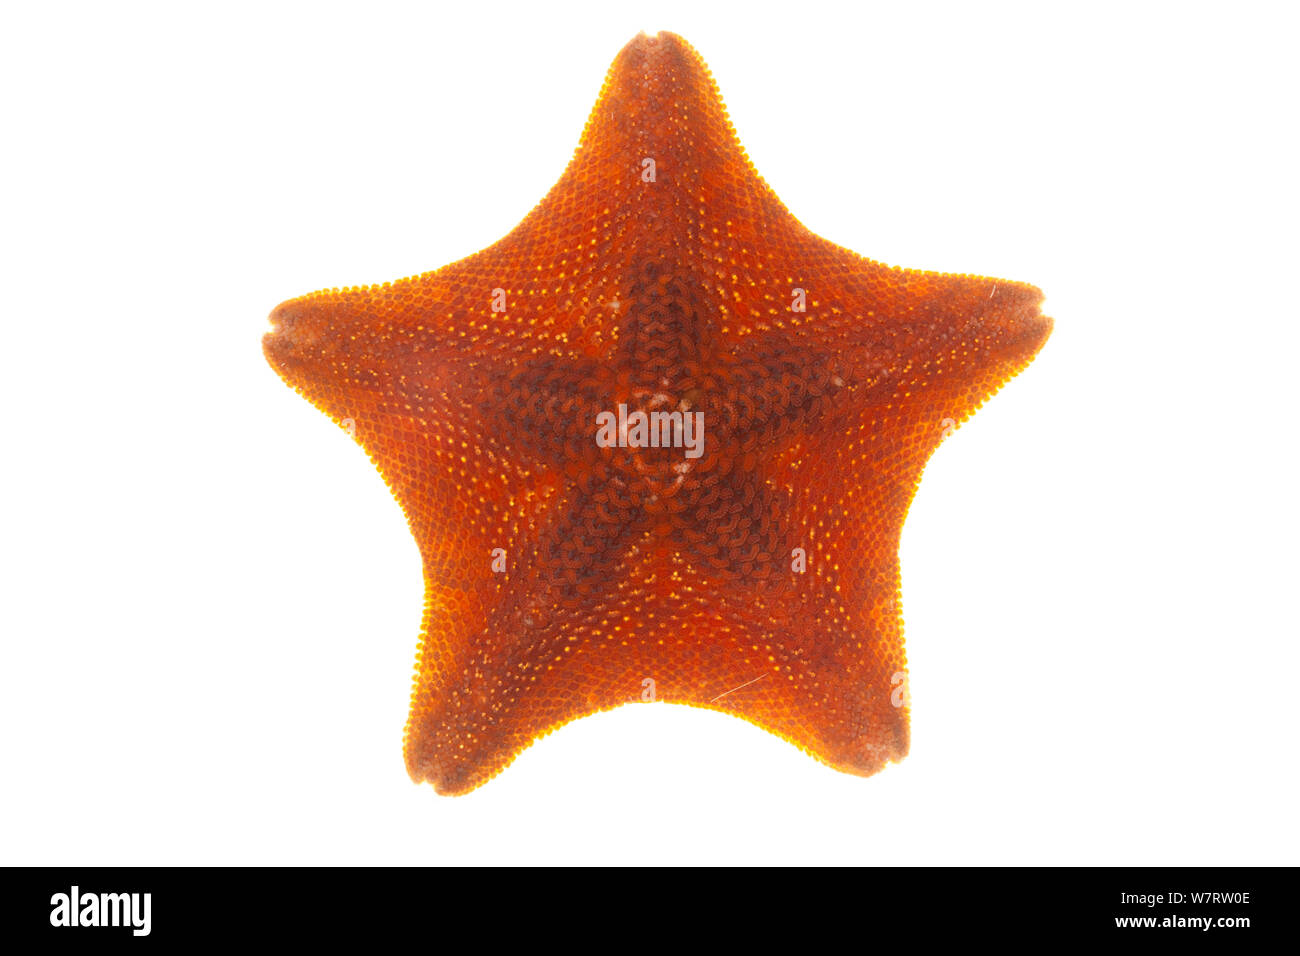 Bat star (Patiria miniata), Malibu, Californie, USA, juin, projet d'meetyourneighbors.net Banque D'Images